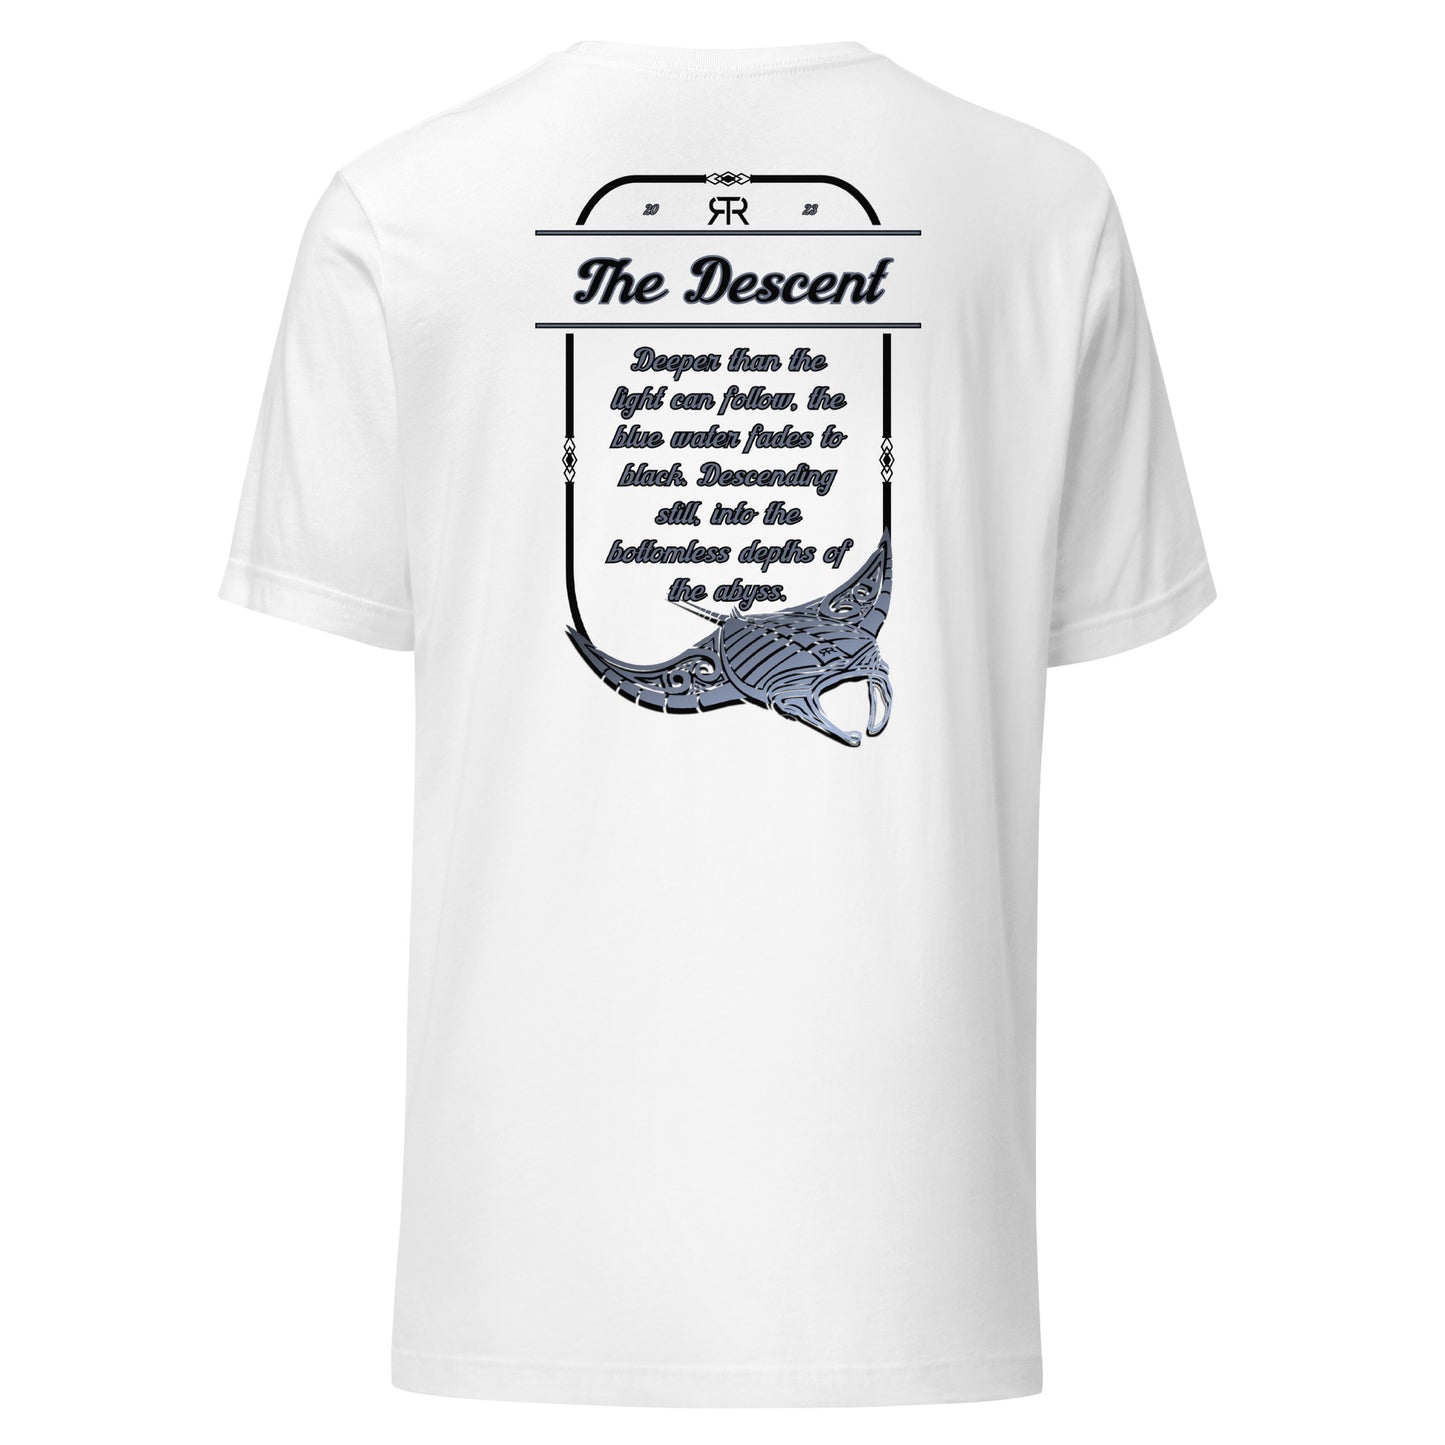 The Descent T-Shirt